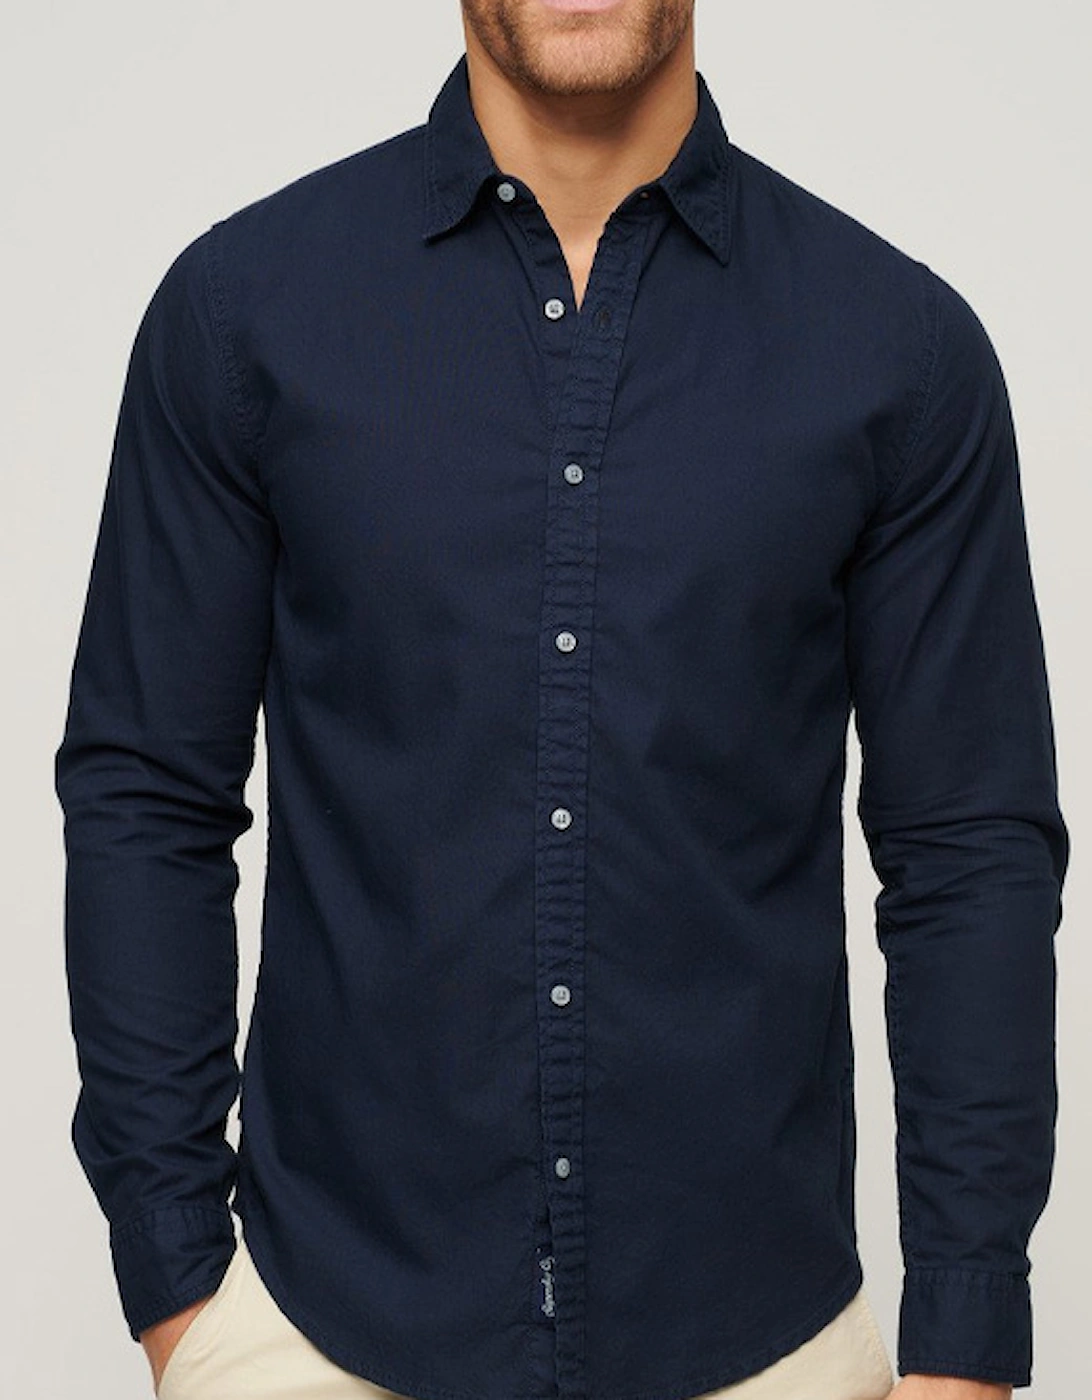 Men's Overdyed Cotton Long Sleeve Shirt Nautical Navy